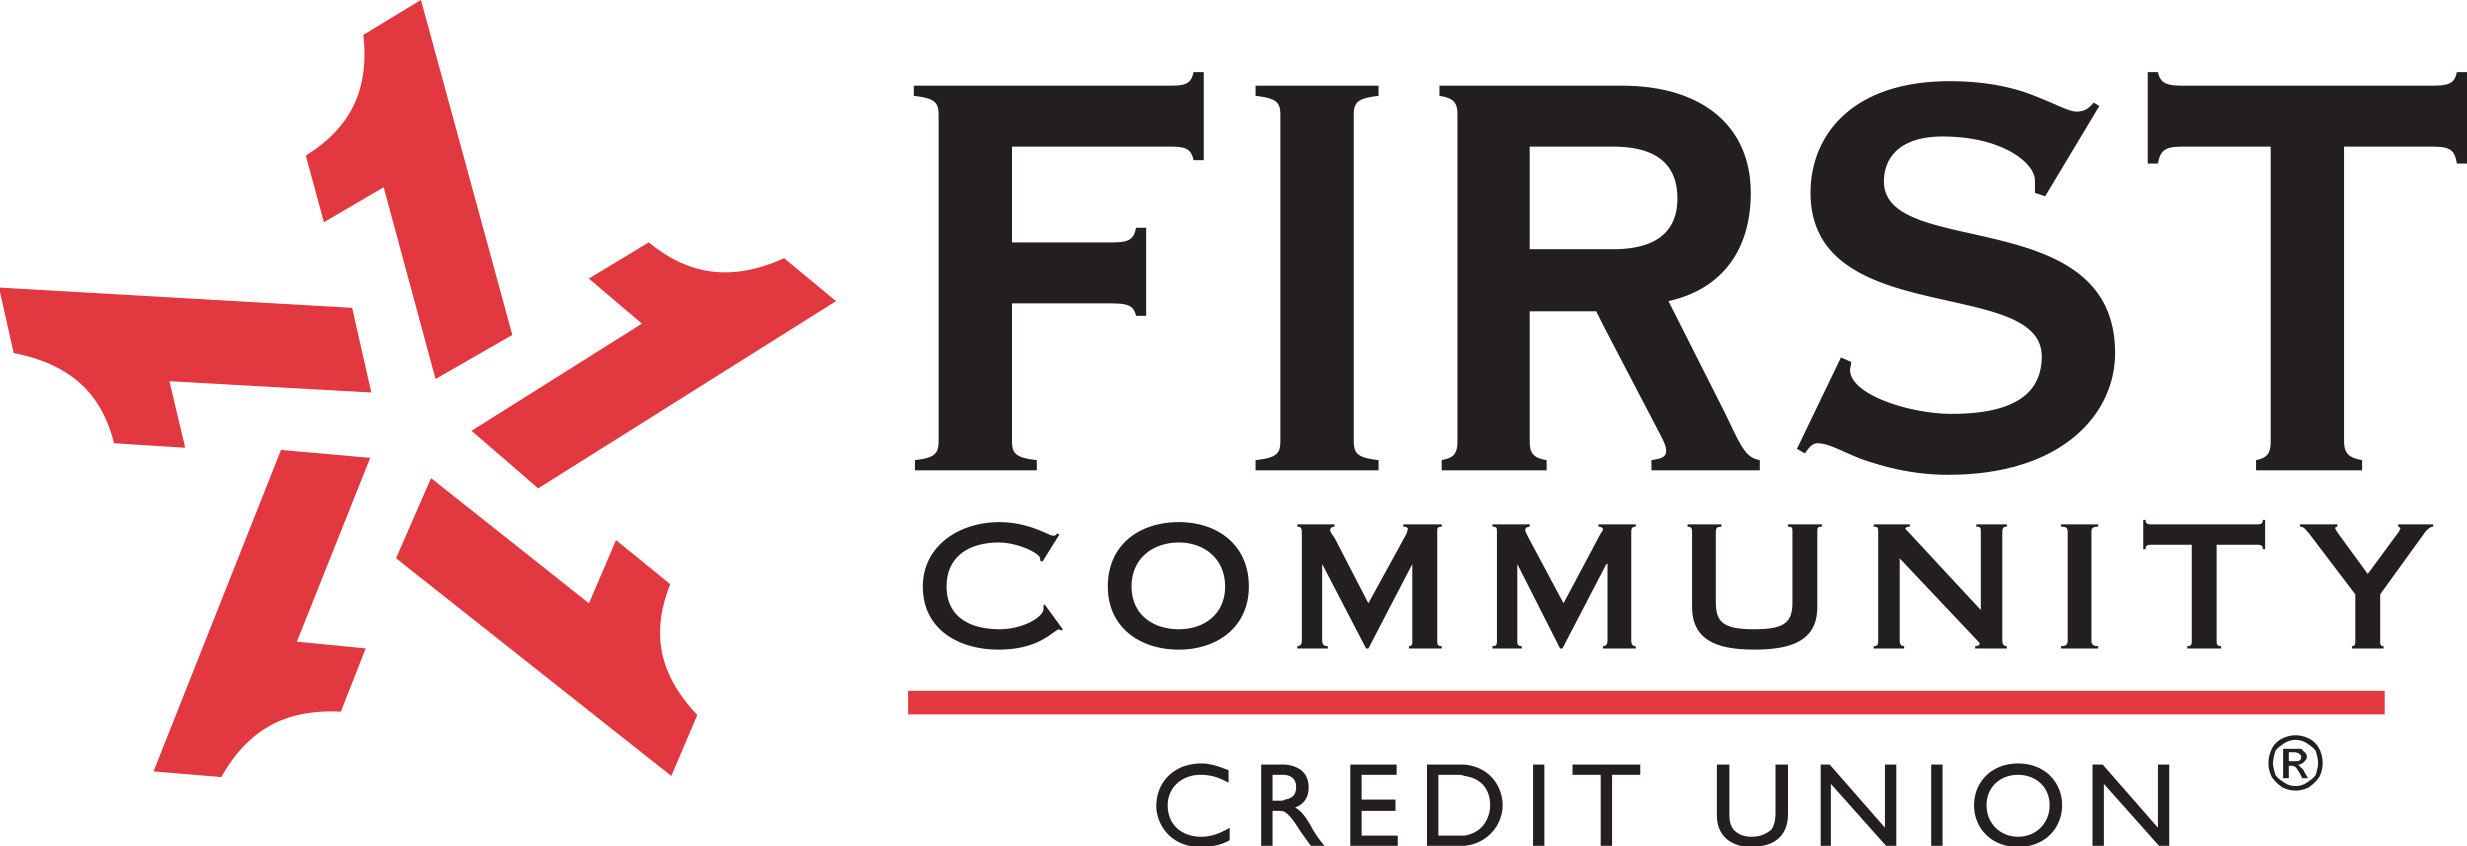 community first credit union